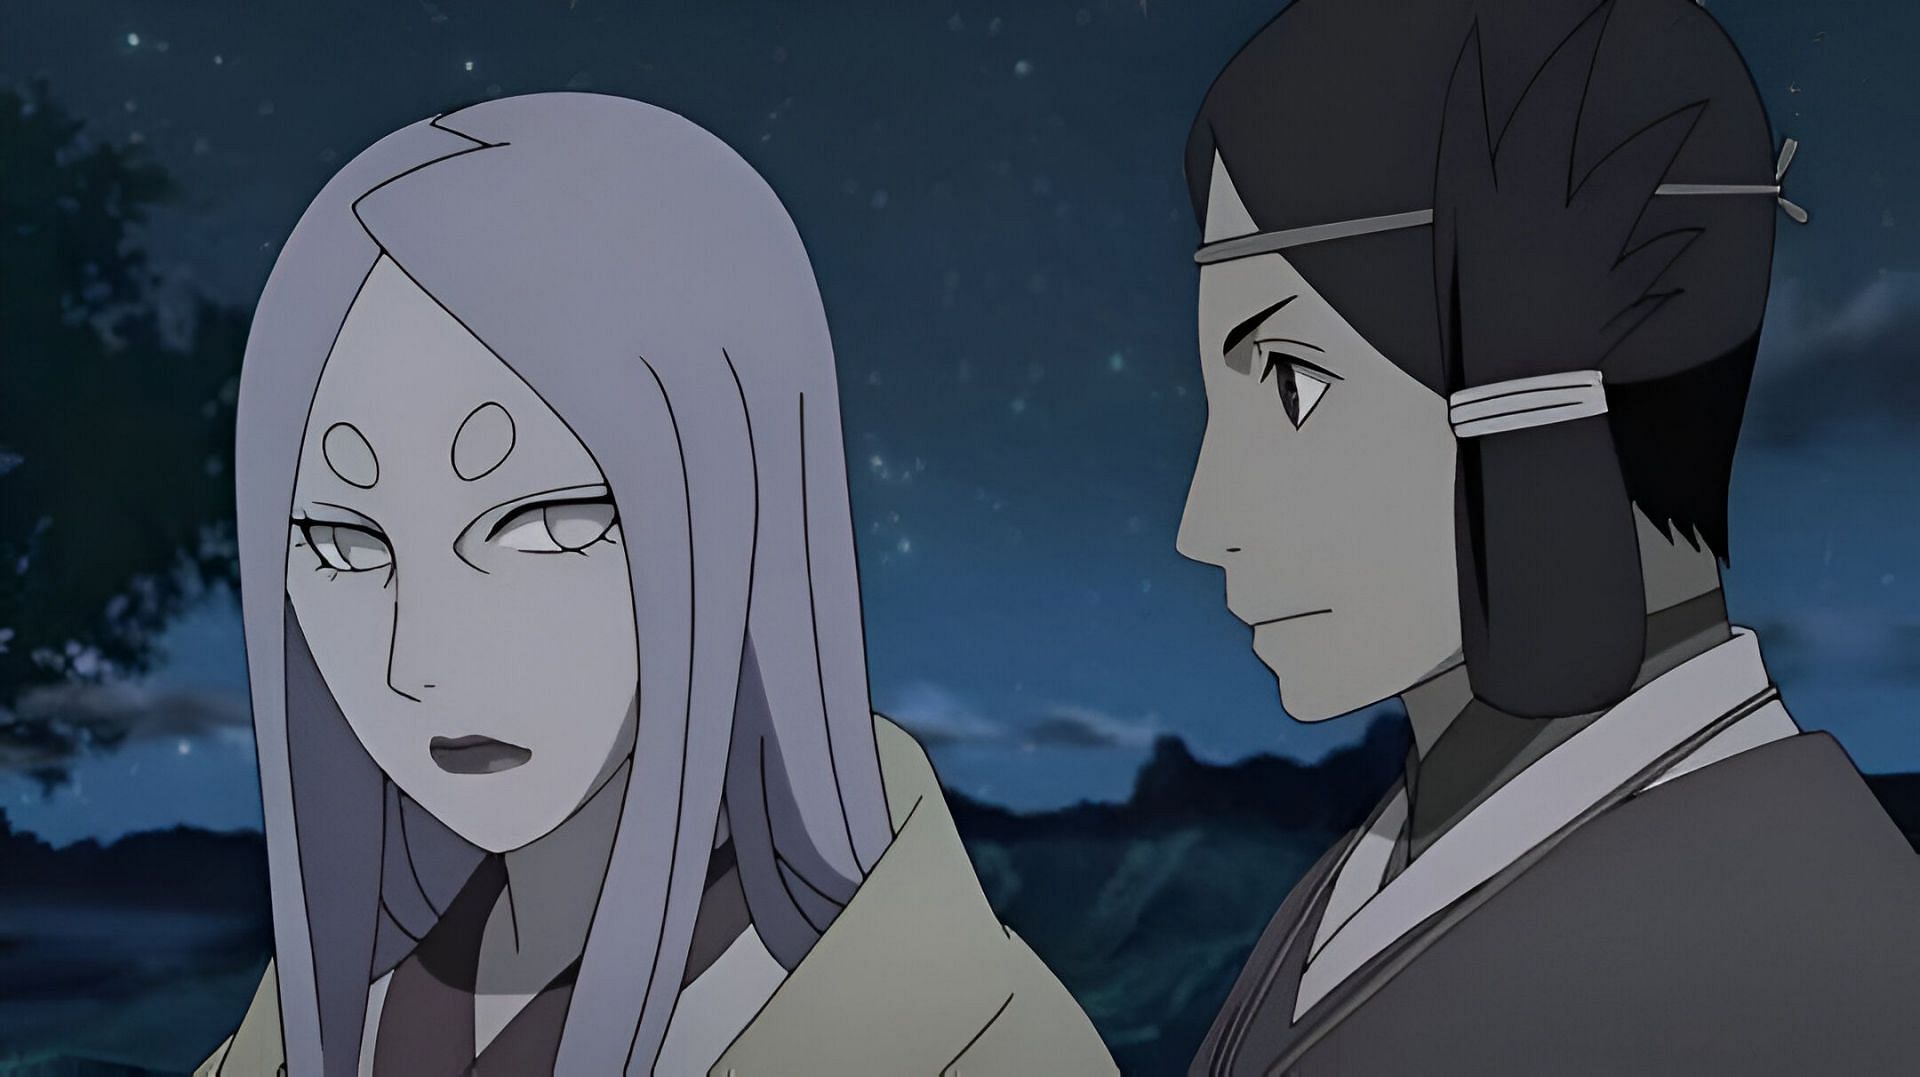 Kaguya (left) and Tenji (right) as seen in the anime (Image via Studio Pierrot)